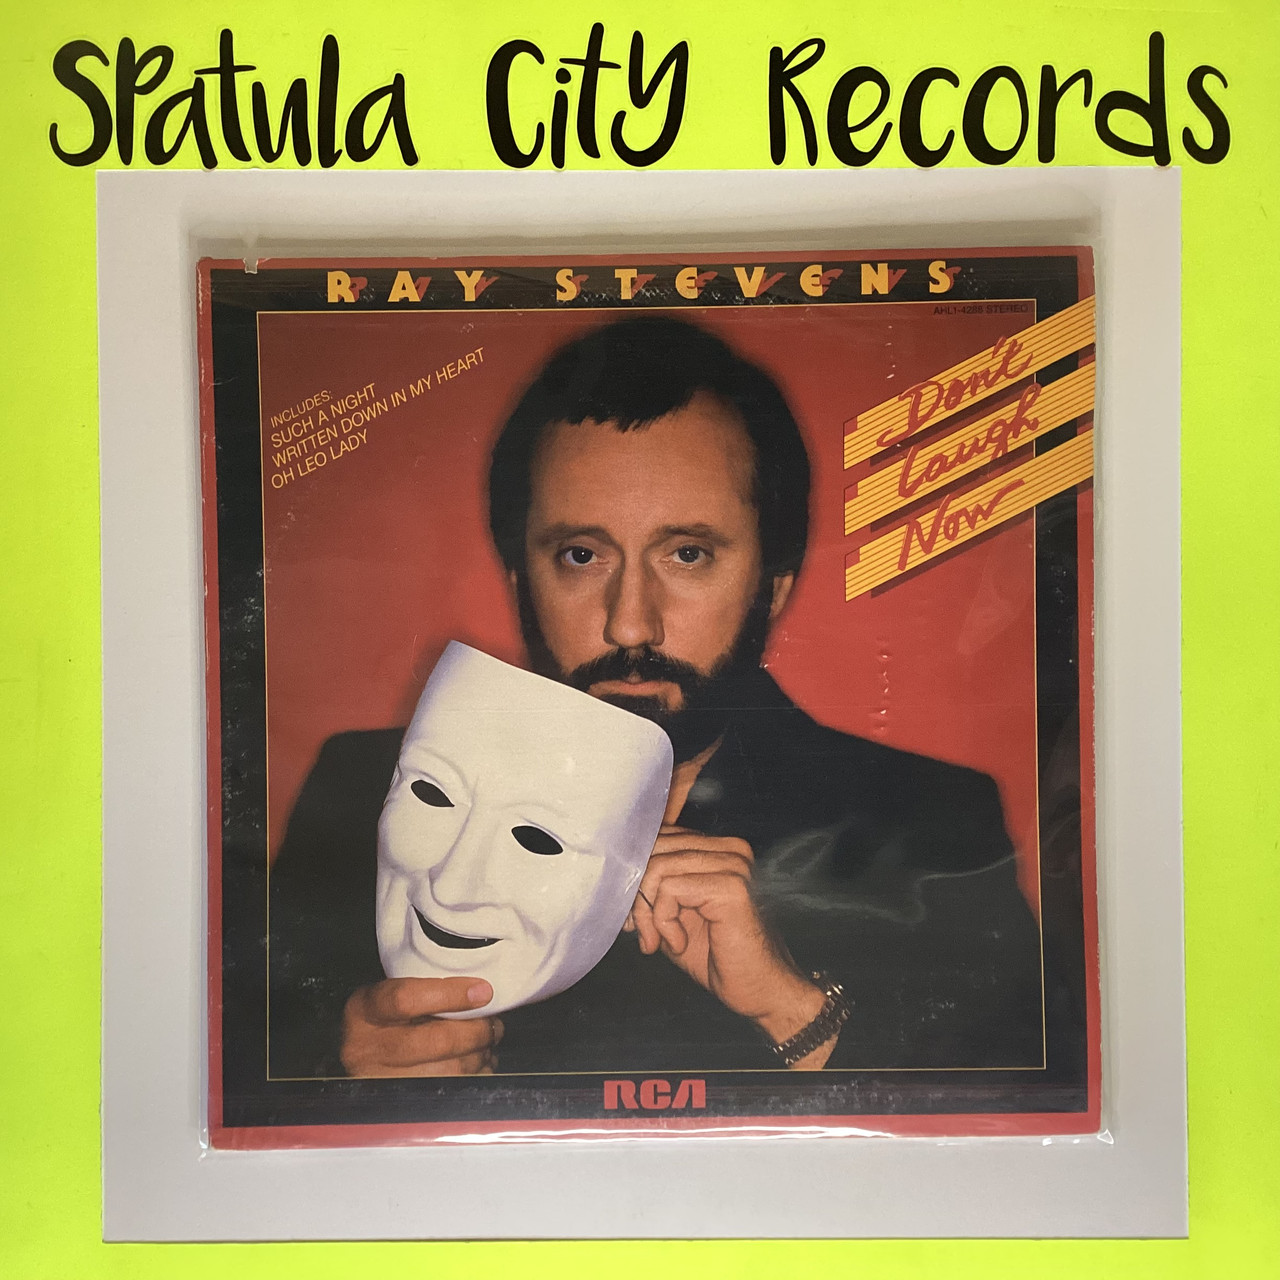 Ray Stevens - Don't laugh now - vinyl record album LP